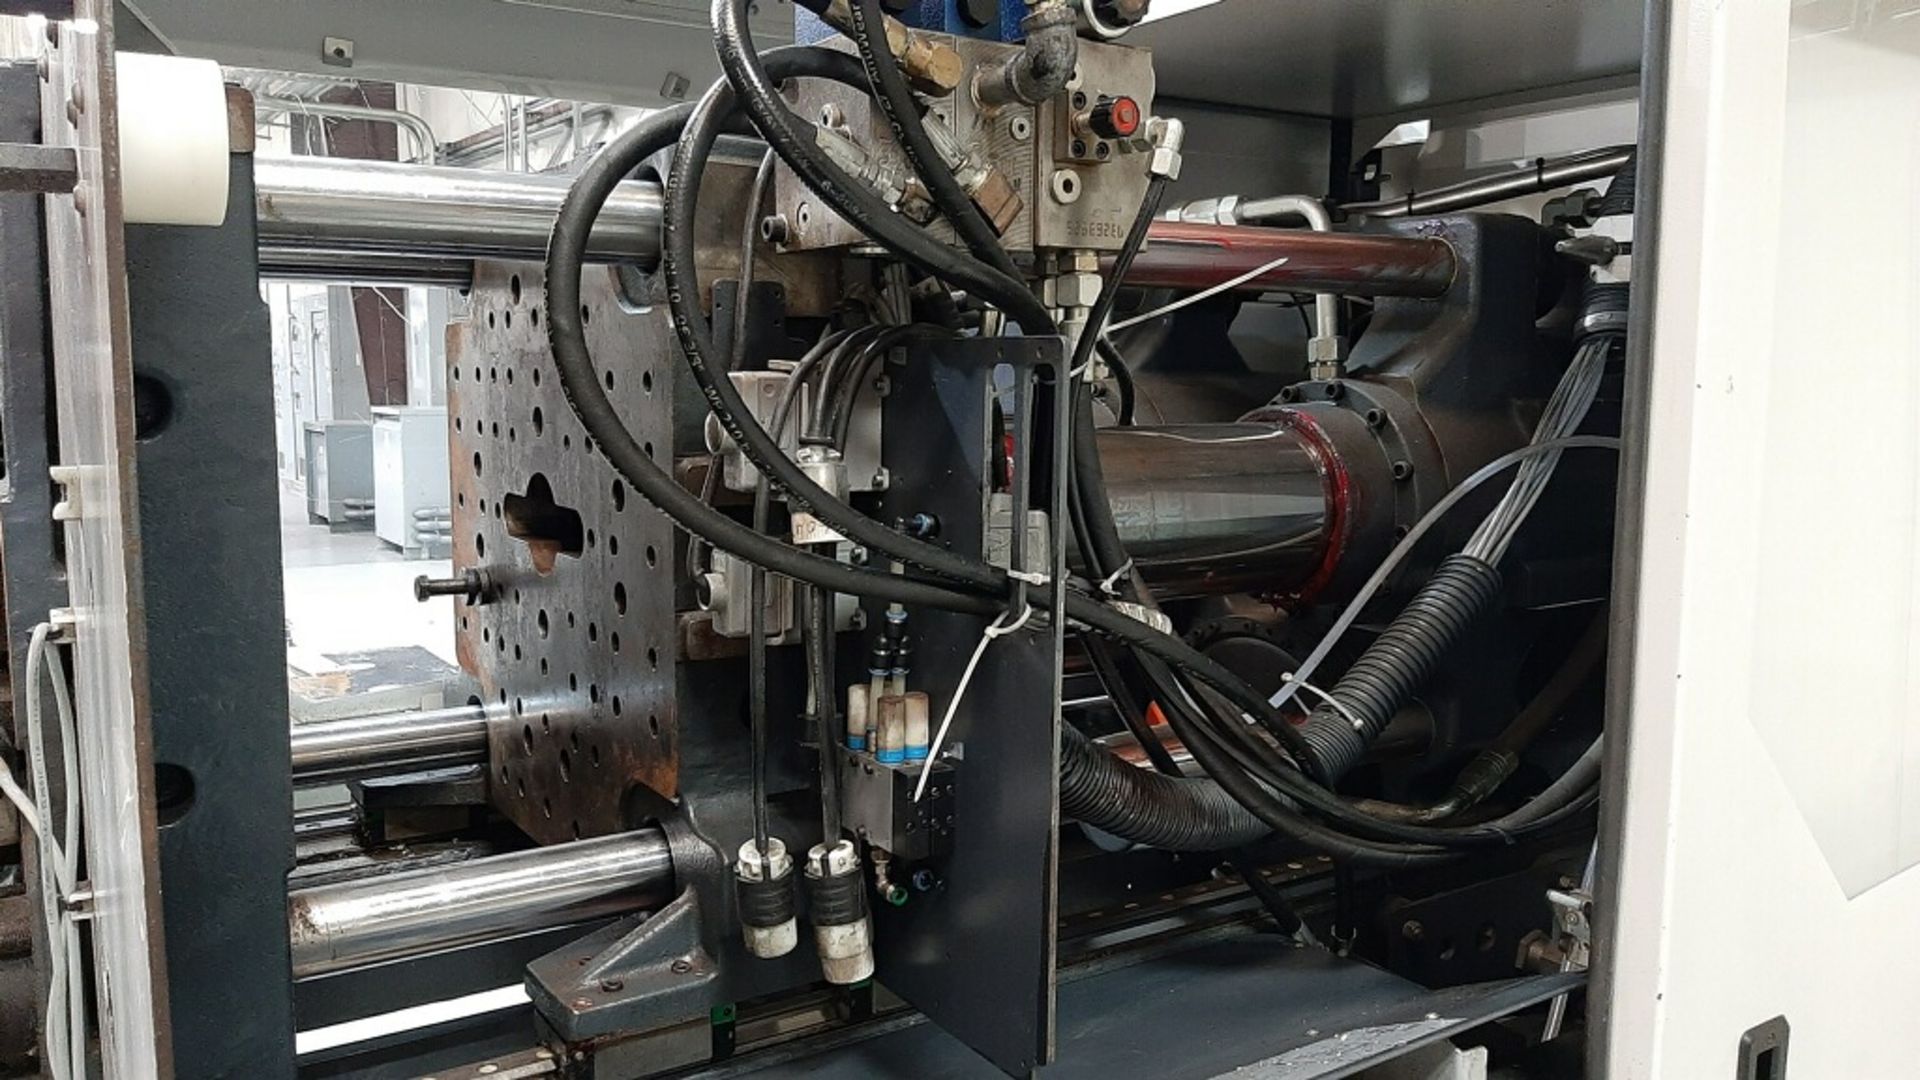 2012 Sumitomo Shi Demag Systec 110-420-600 Hybrid Injection Mold Press, Sumitomo NC5 Controls - Image 5 of 8